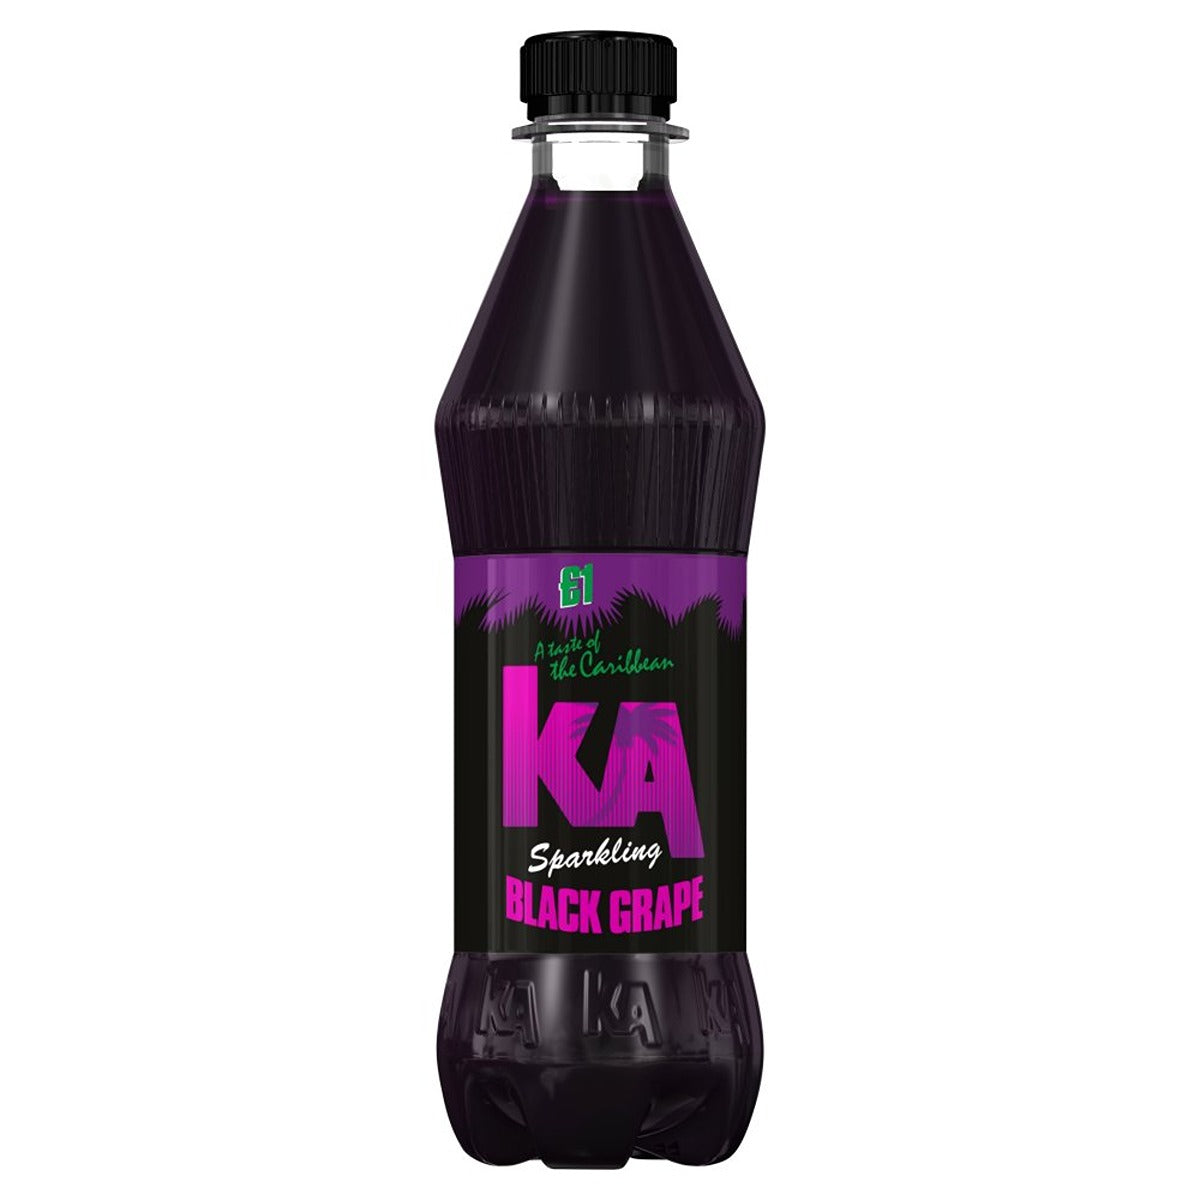 KA - Sparkling Black Grape - 500ml - Continental Food Store